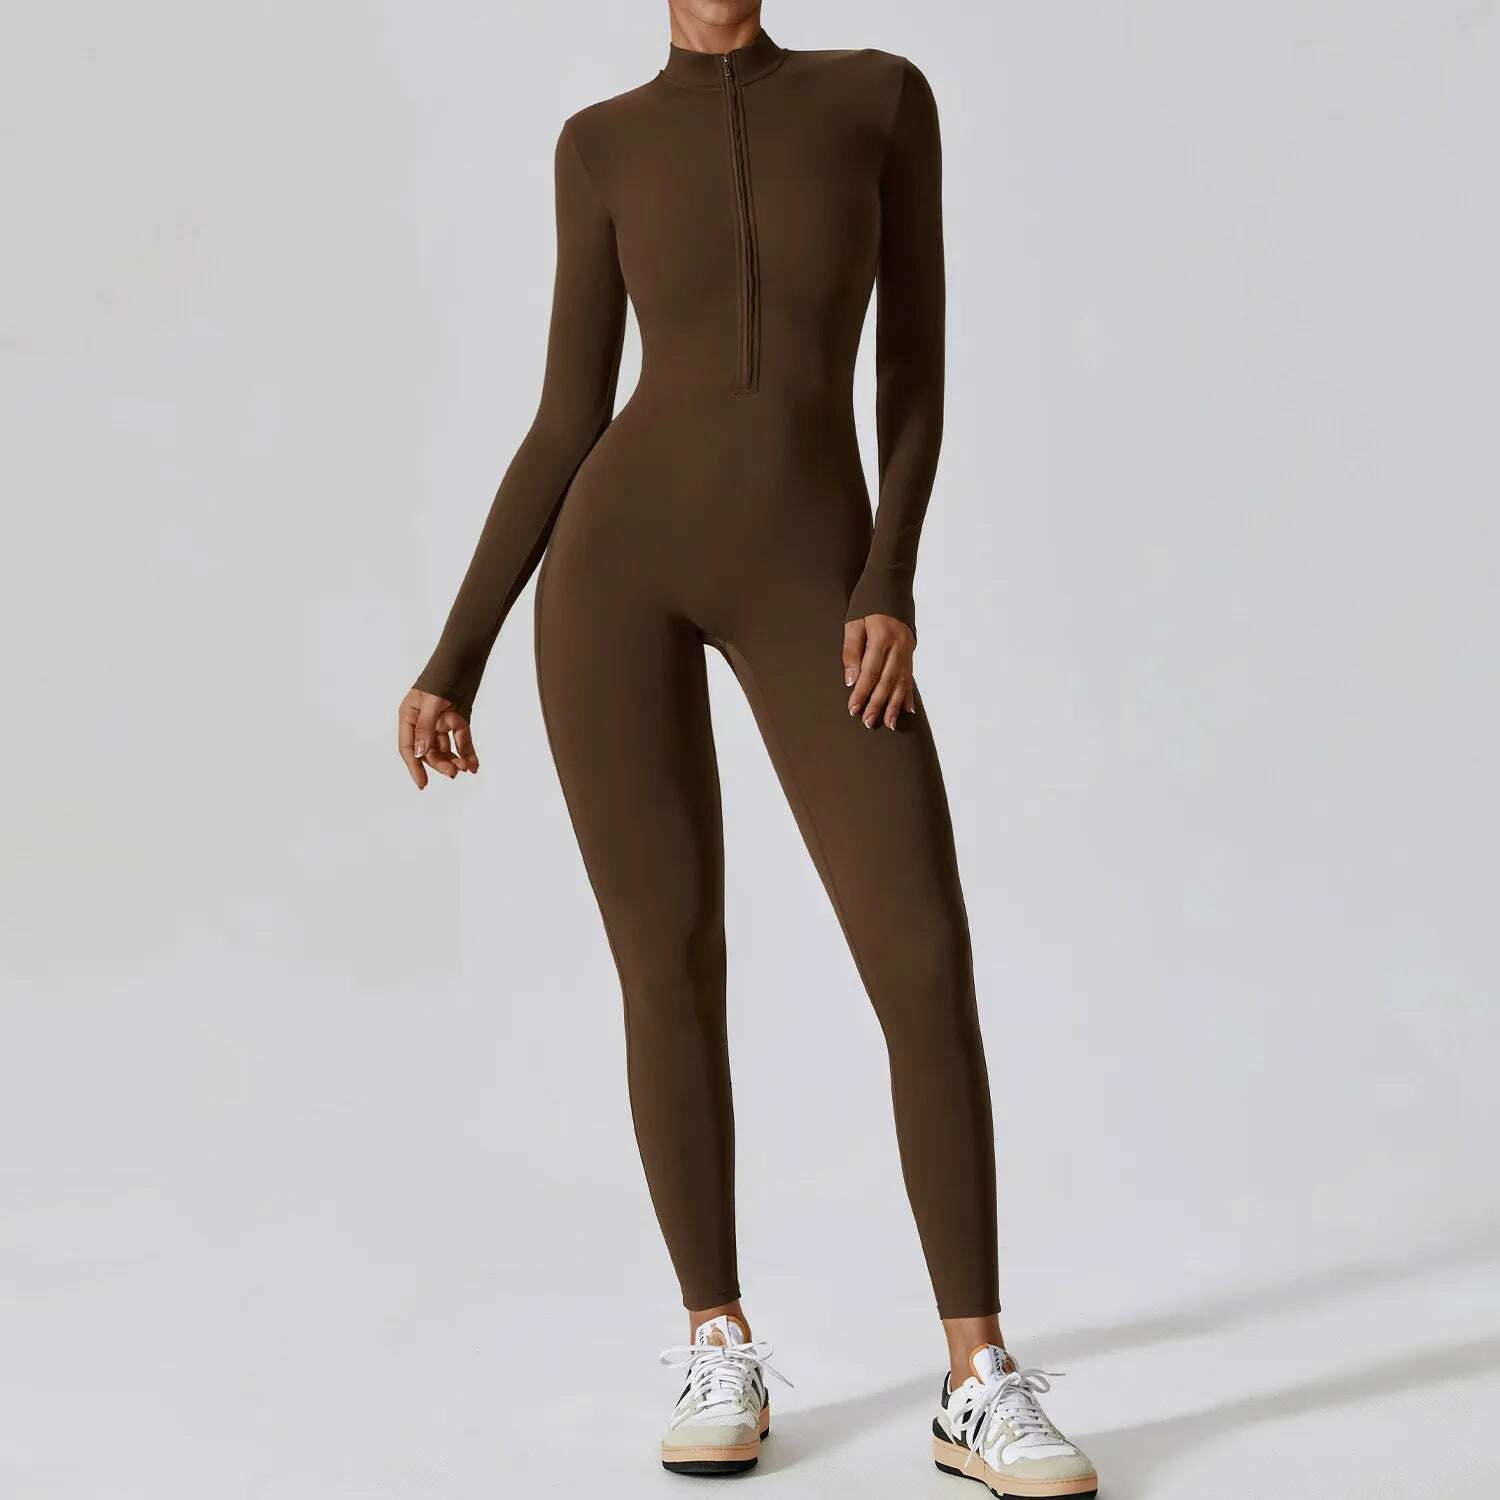 KIMLUD, Yoga Boilersuit Long Sleeved Women's Sportswear Gym Zipper Jumpsuits Workout High-intensity Fitness One-piece Skin-tight Garment, Jiaocha Coffee / S / CHINA, KIMLUD Women's Clothes